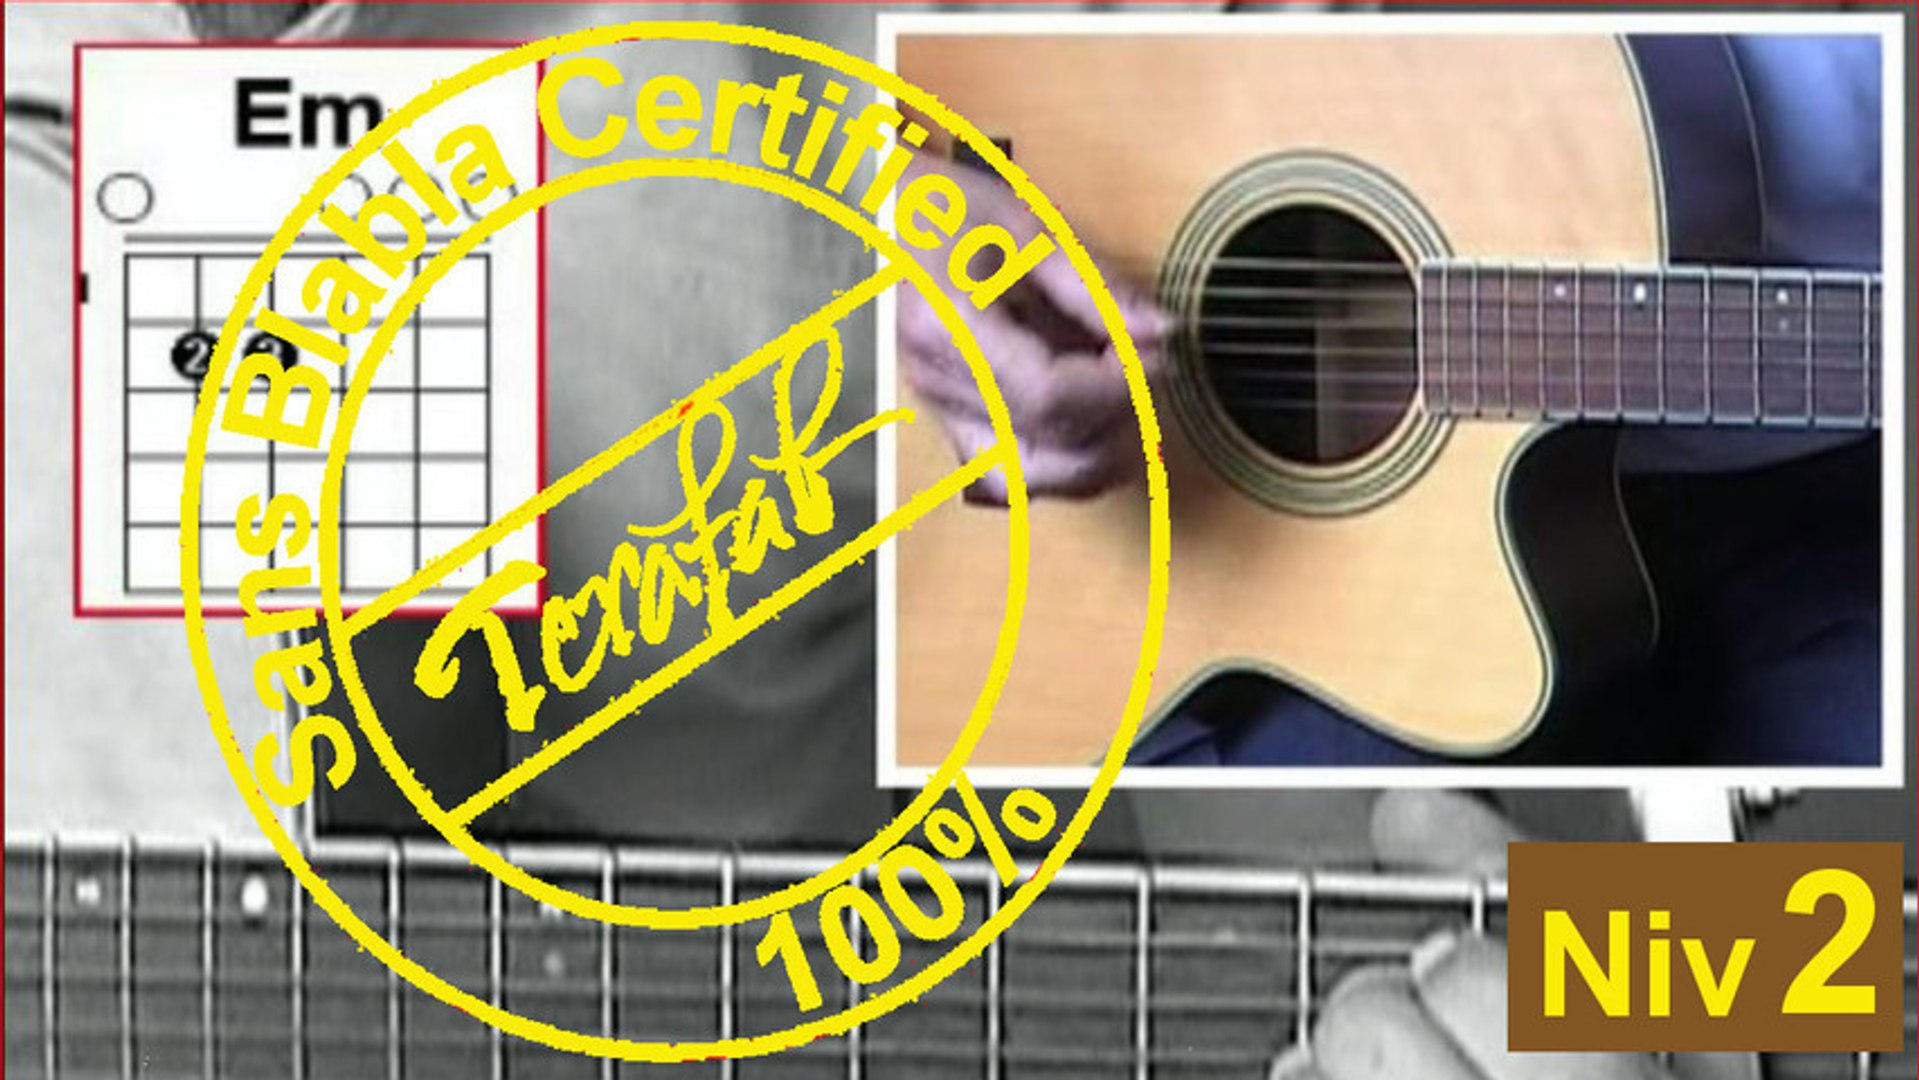 Mon vieux - Daniel Guichard [Tuto guitare] by Terafab - Vidéo Dailymotion